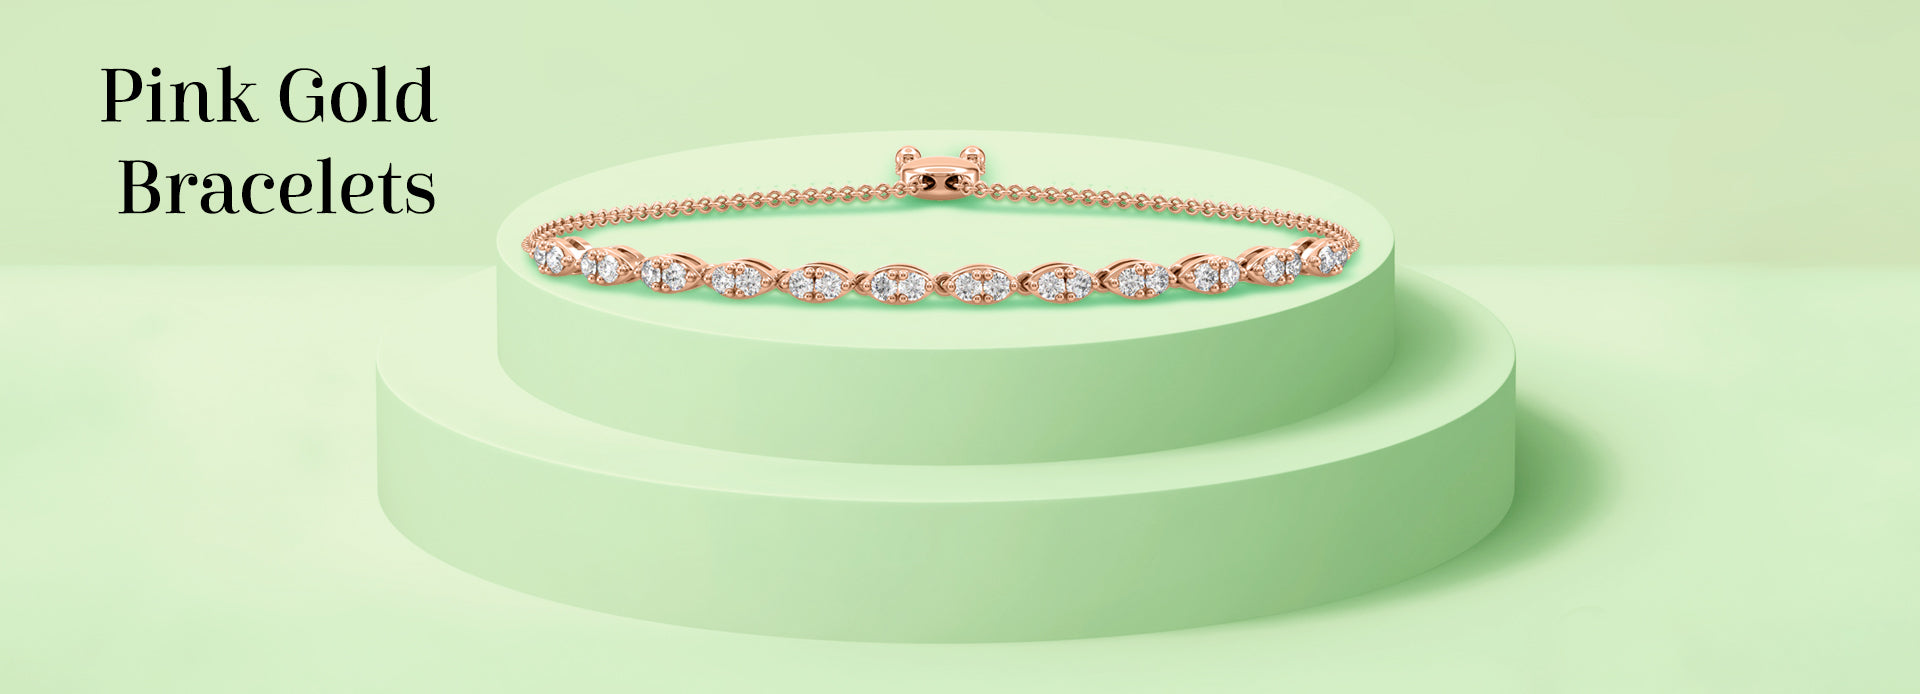 Pink Gold bracelets